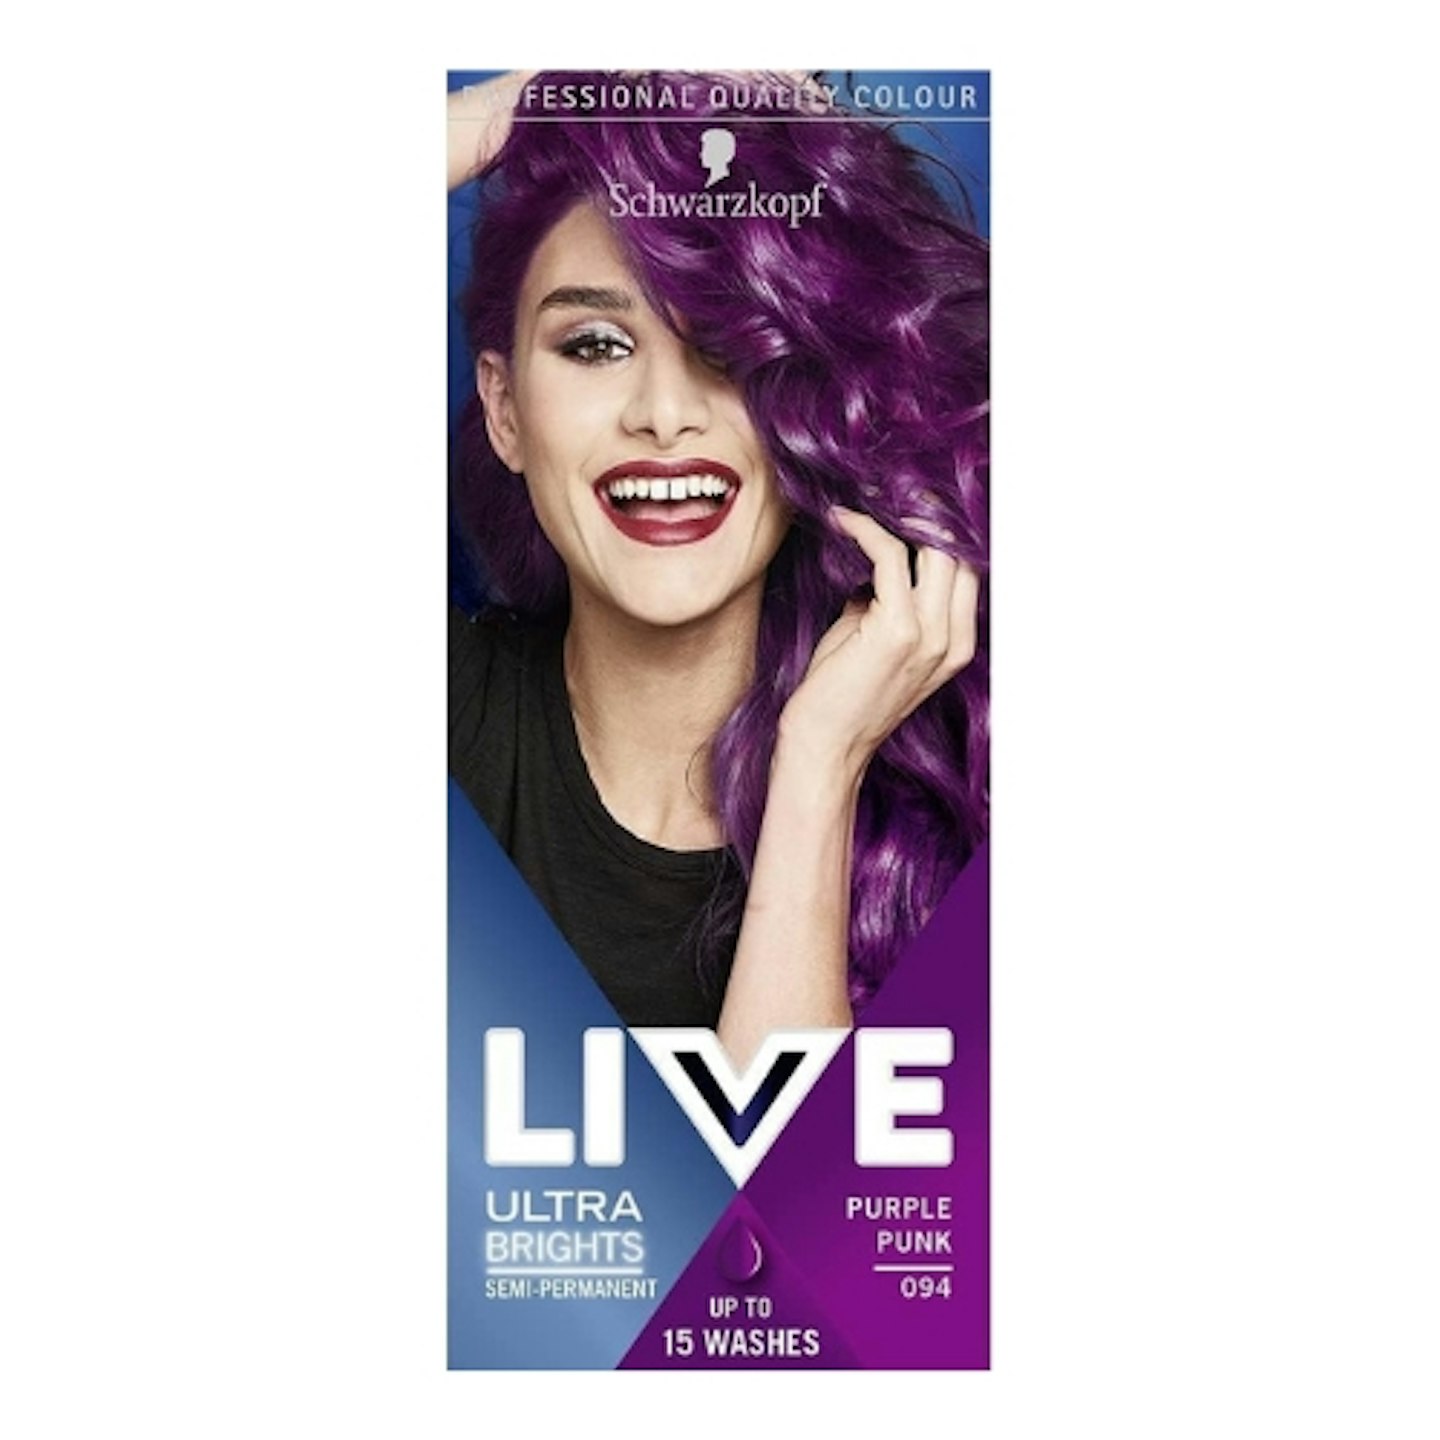 Schwarzkopf Live Ultra Bright or Pastel Hair Dye